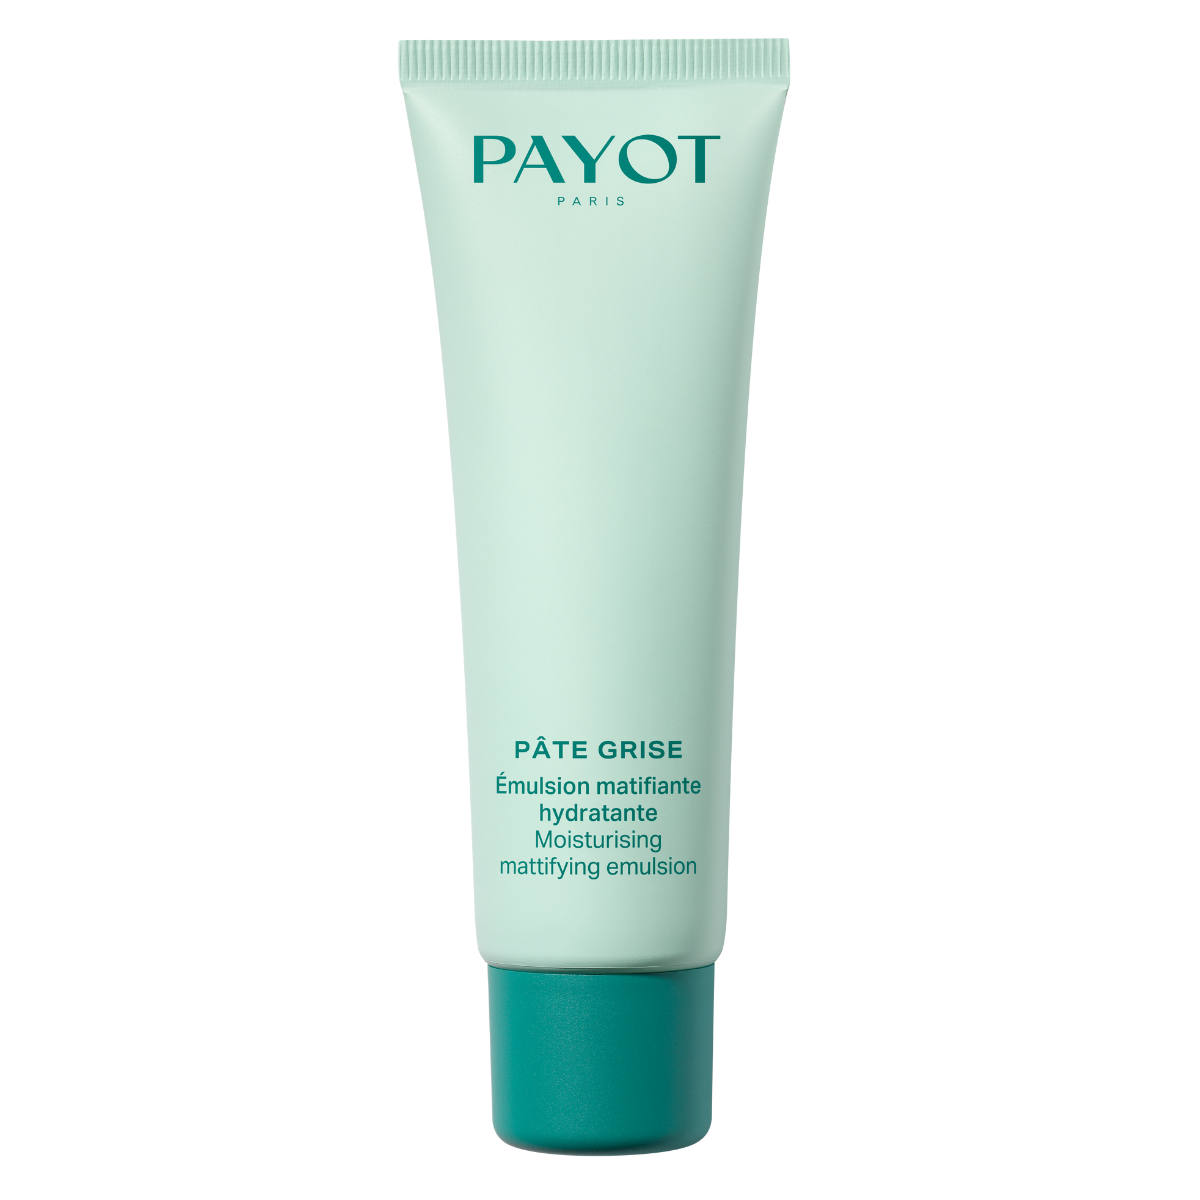 Payot - Pâte Grise Moisturising Mattifying Emulsion 50 ml